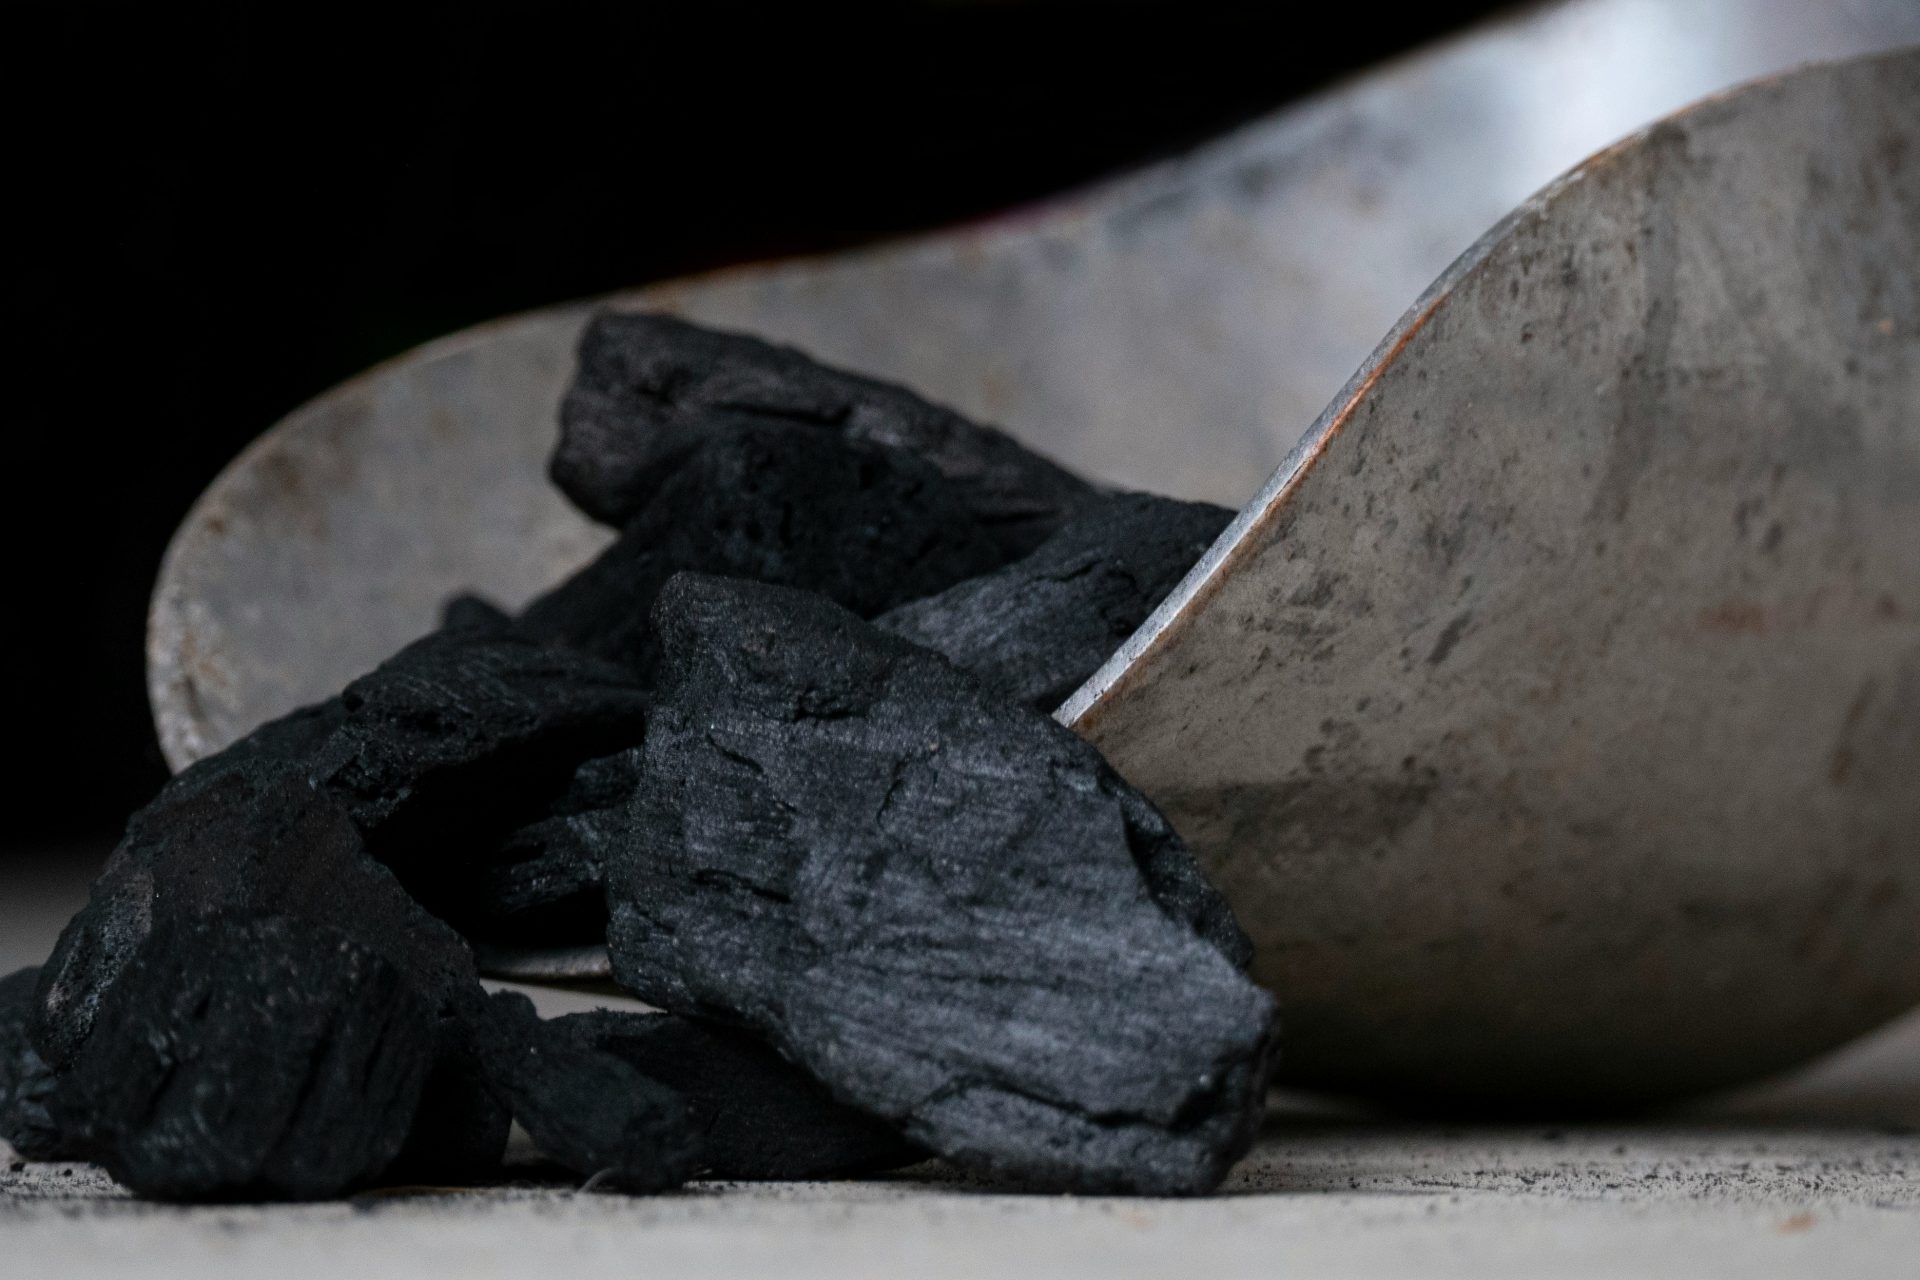 A coal town's dark history